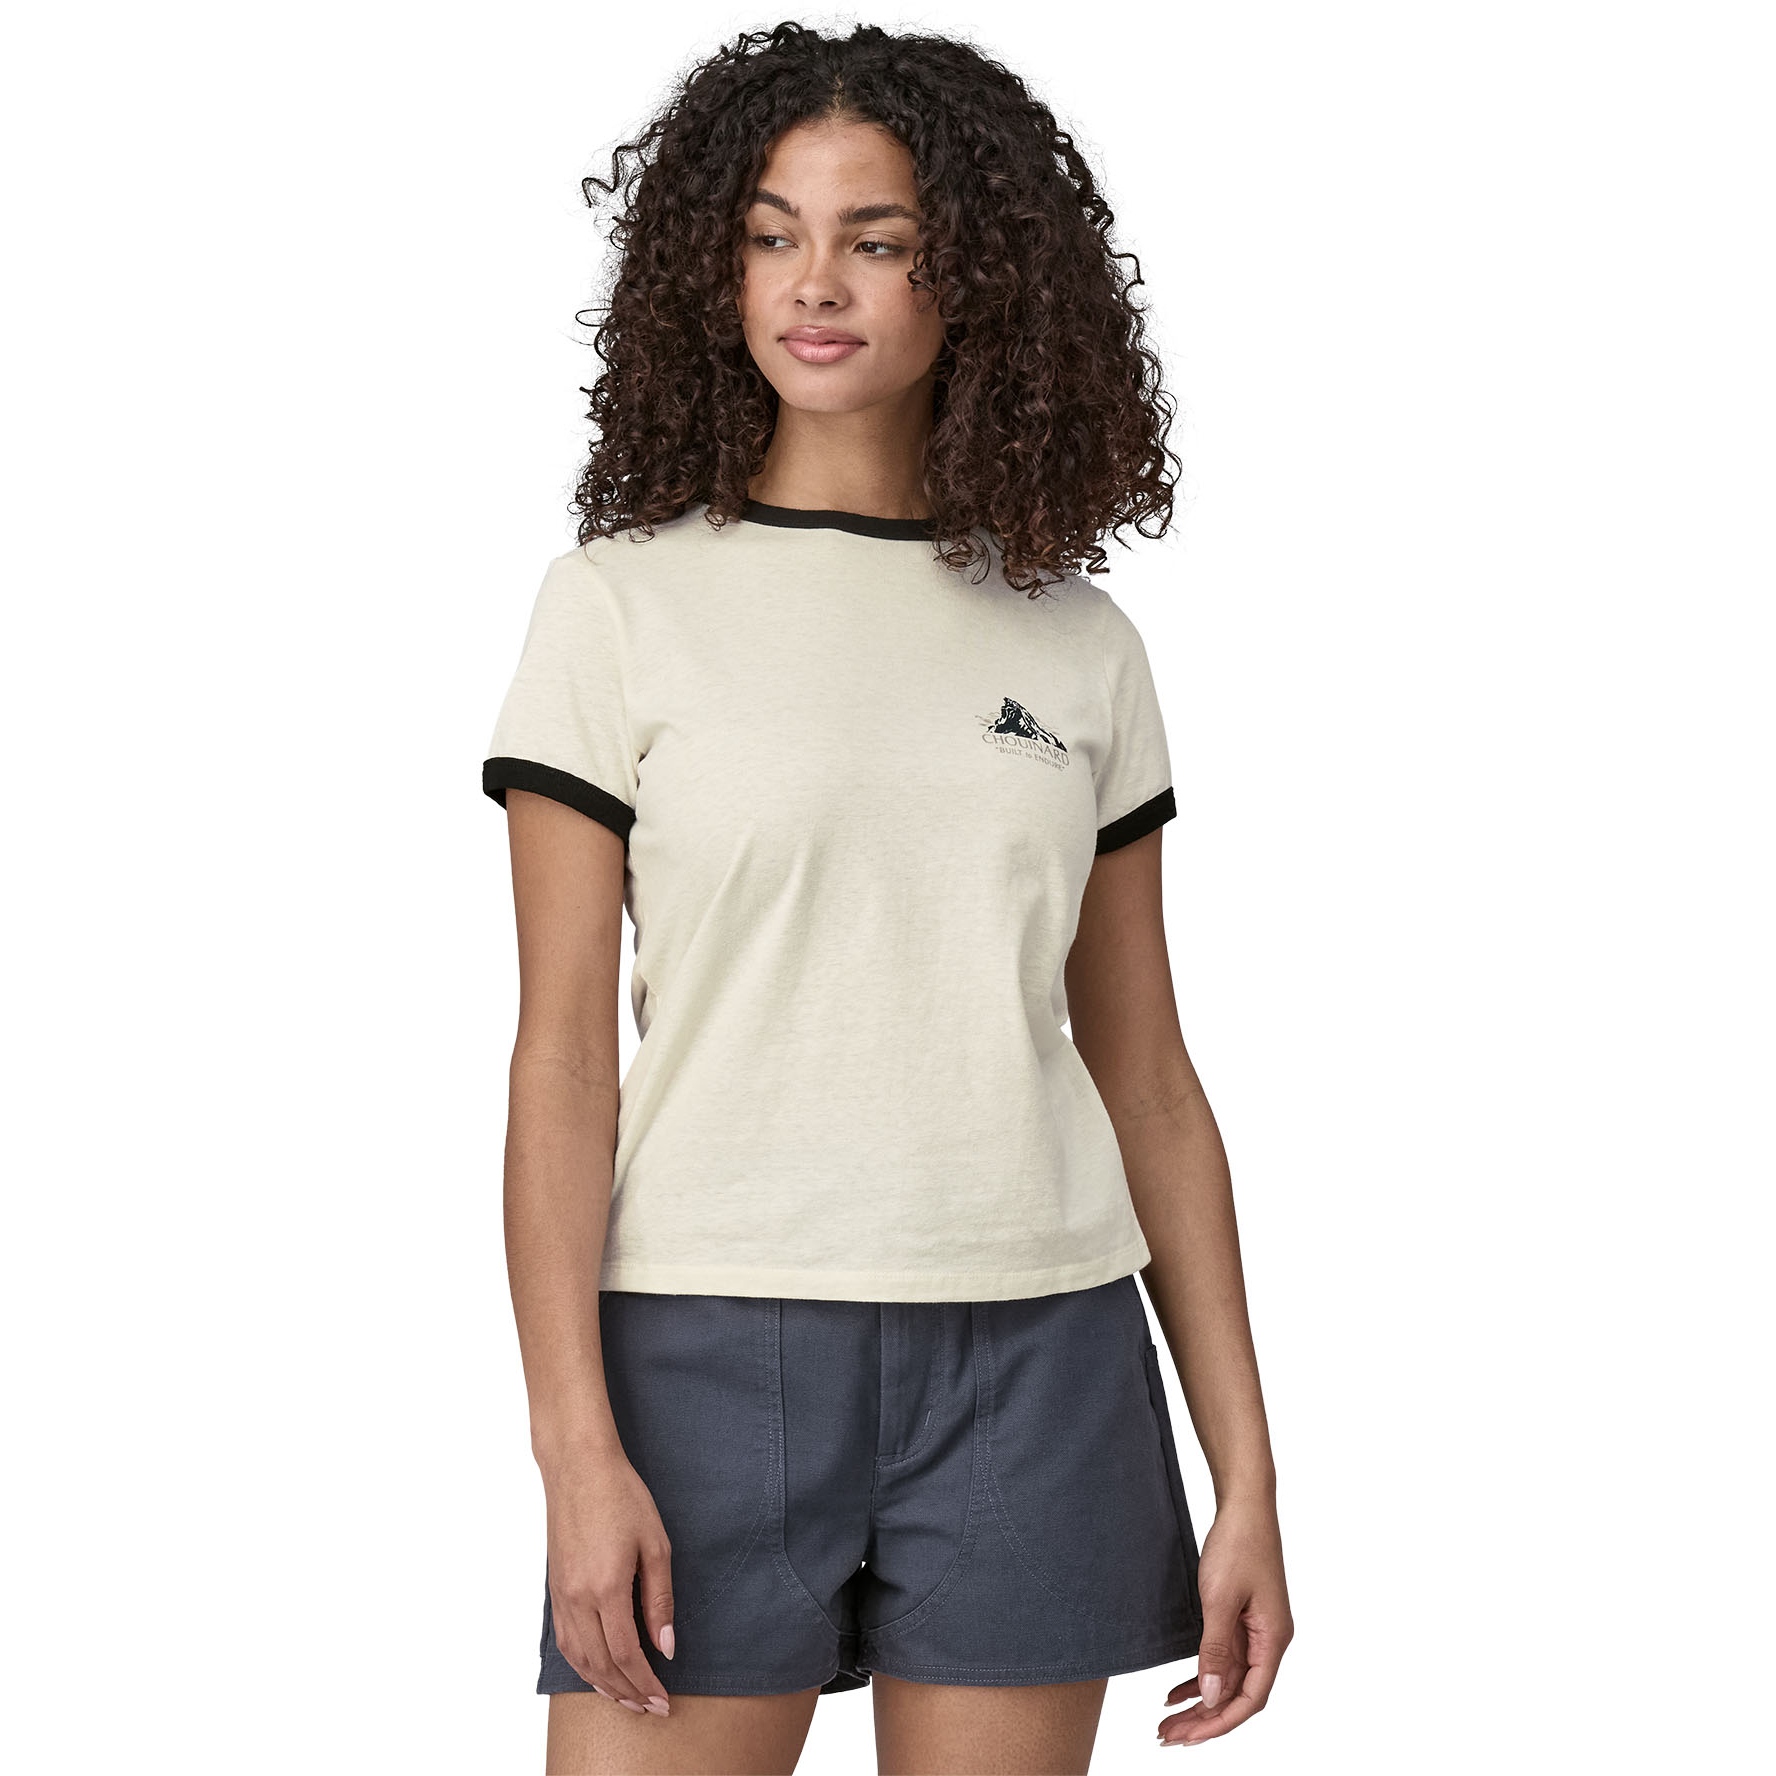 Productfoto van Patagonia Chouinard Crest Ringer Responsibili-Tee T-Shirt Dames - Birch White